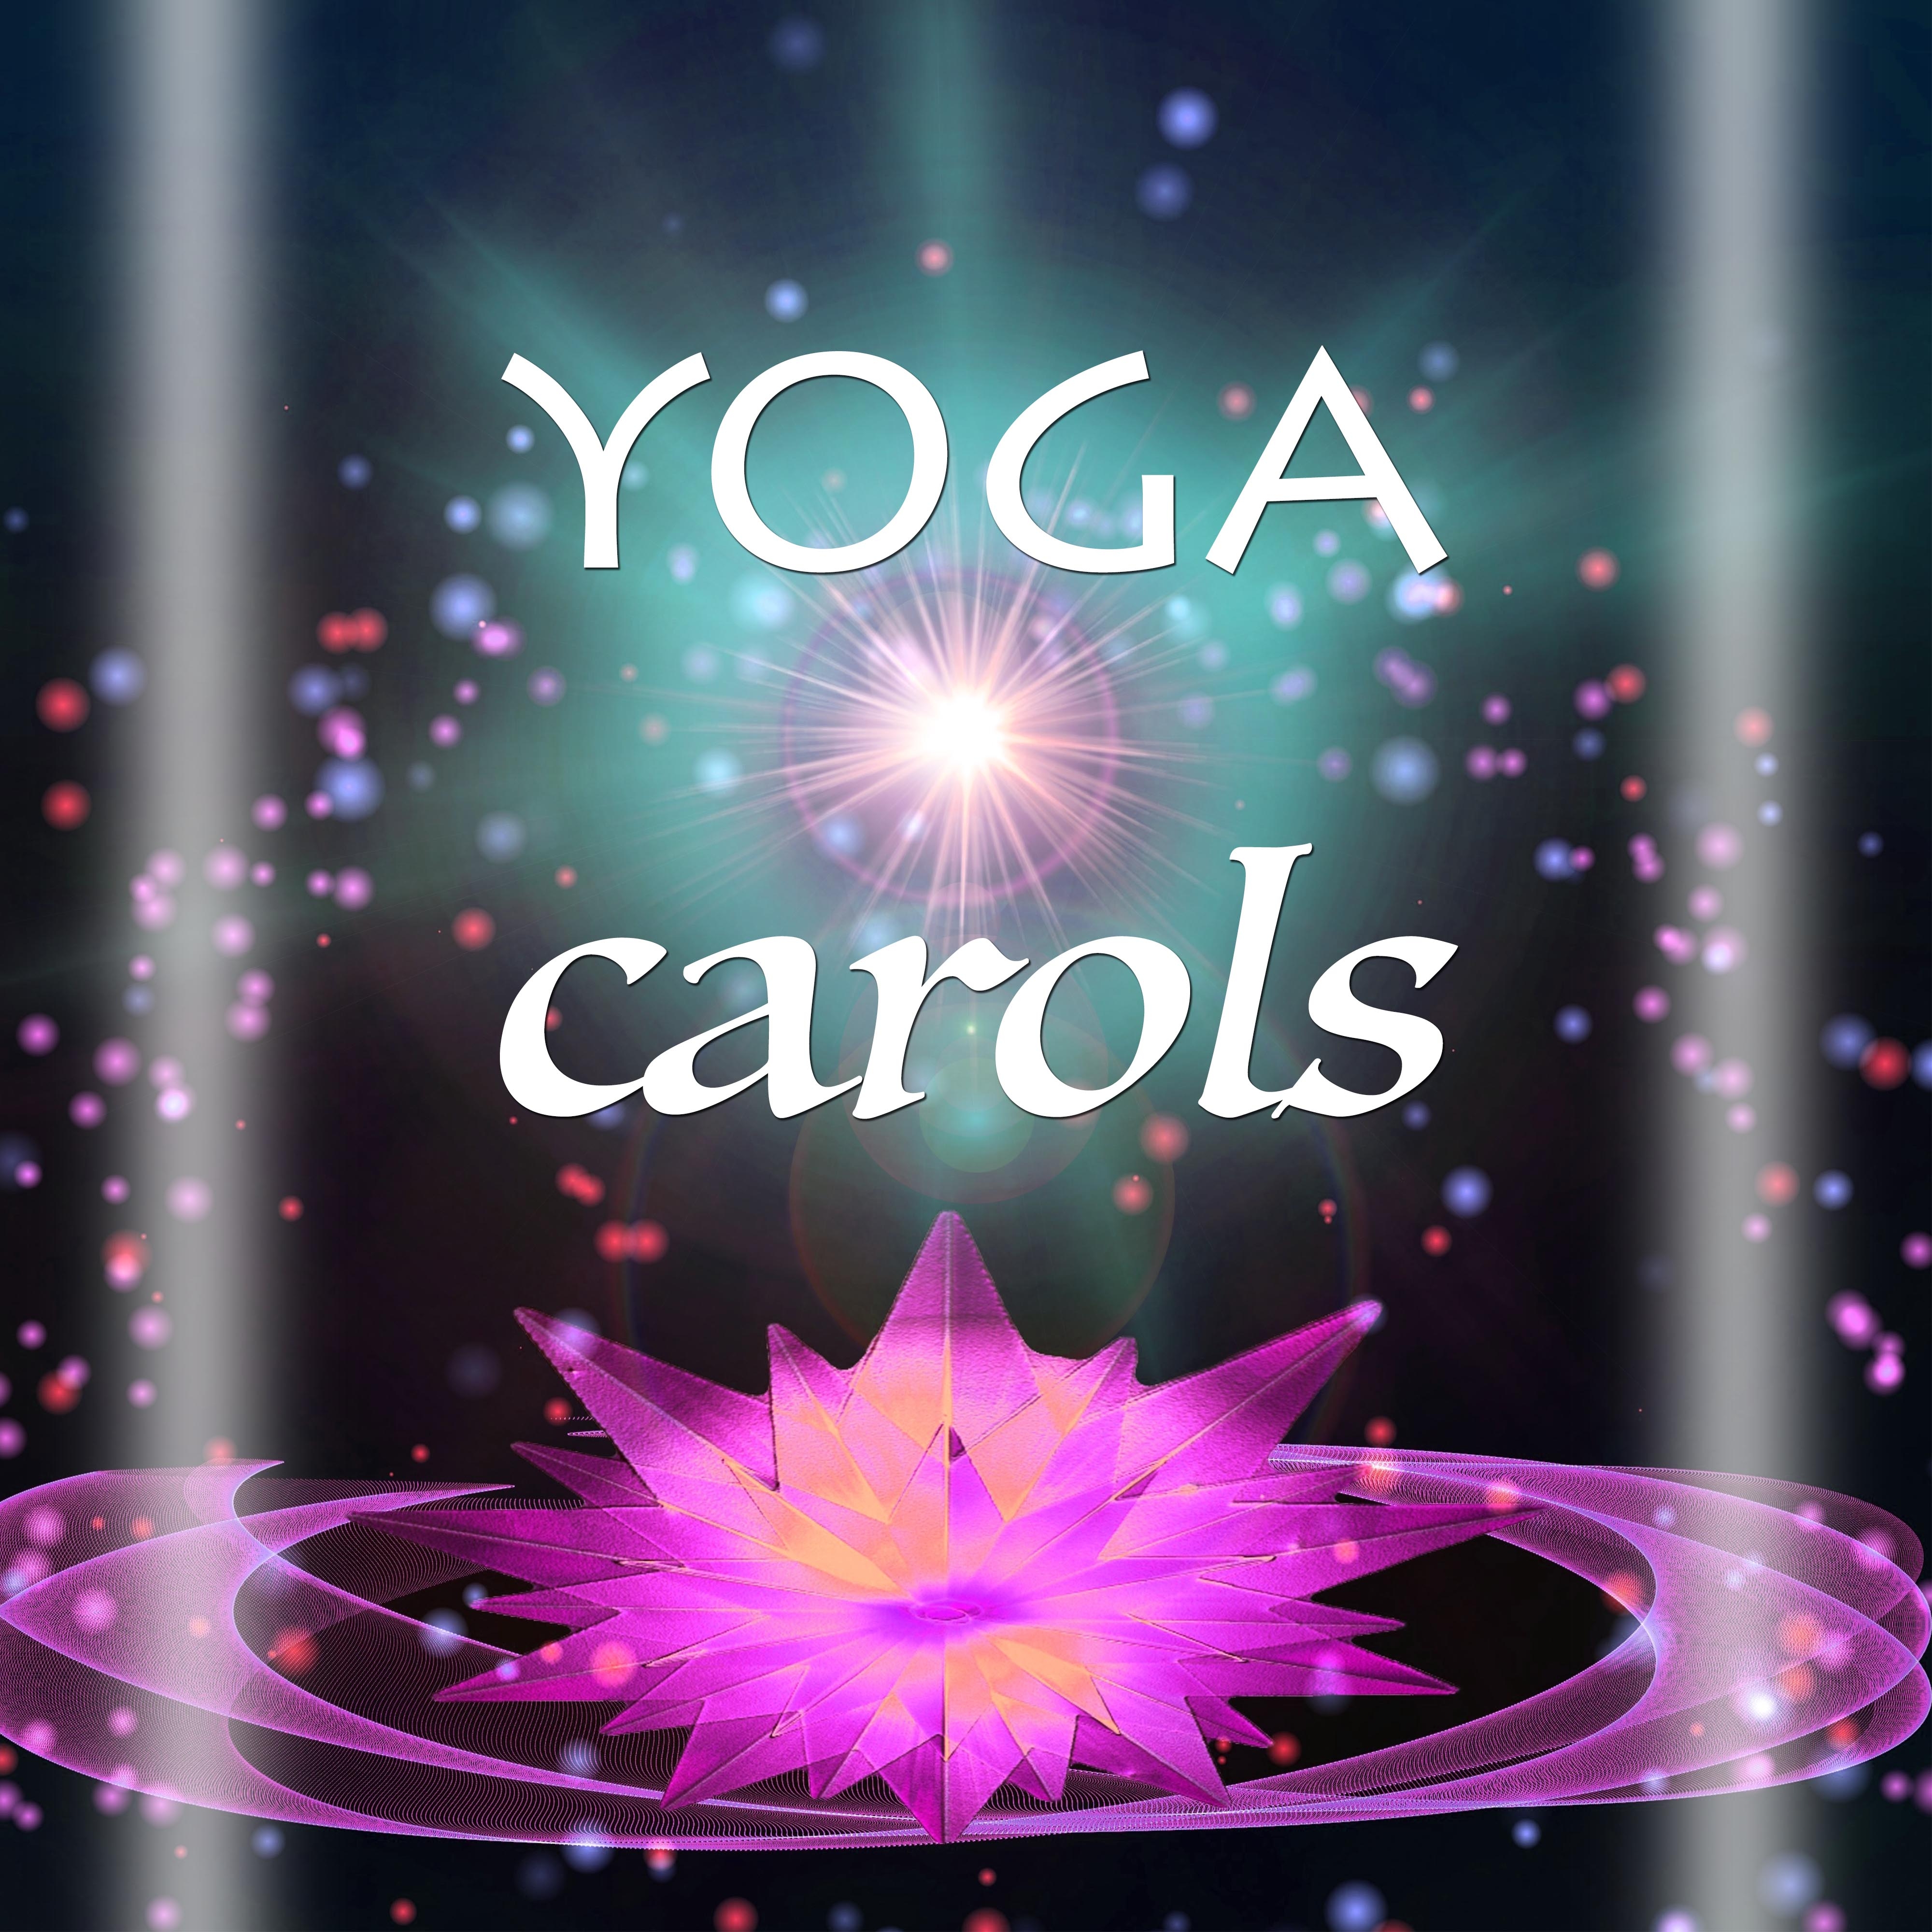 Yoga Carols: Emotional Relaxing Nature Sounds for Yoga and Hatha Yoga for Christmas Holidays